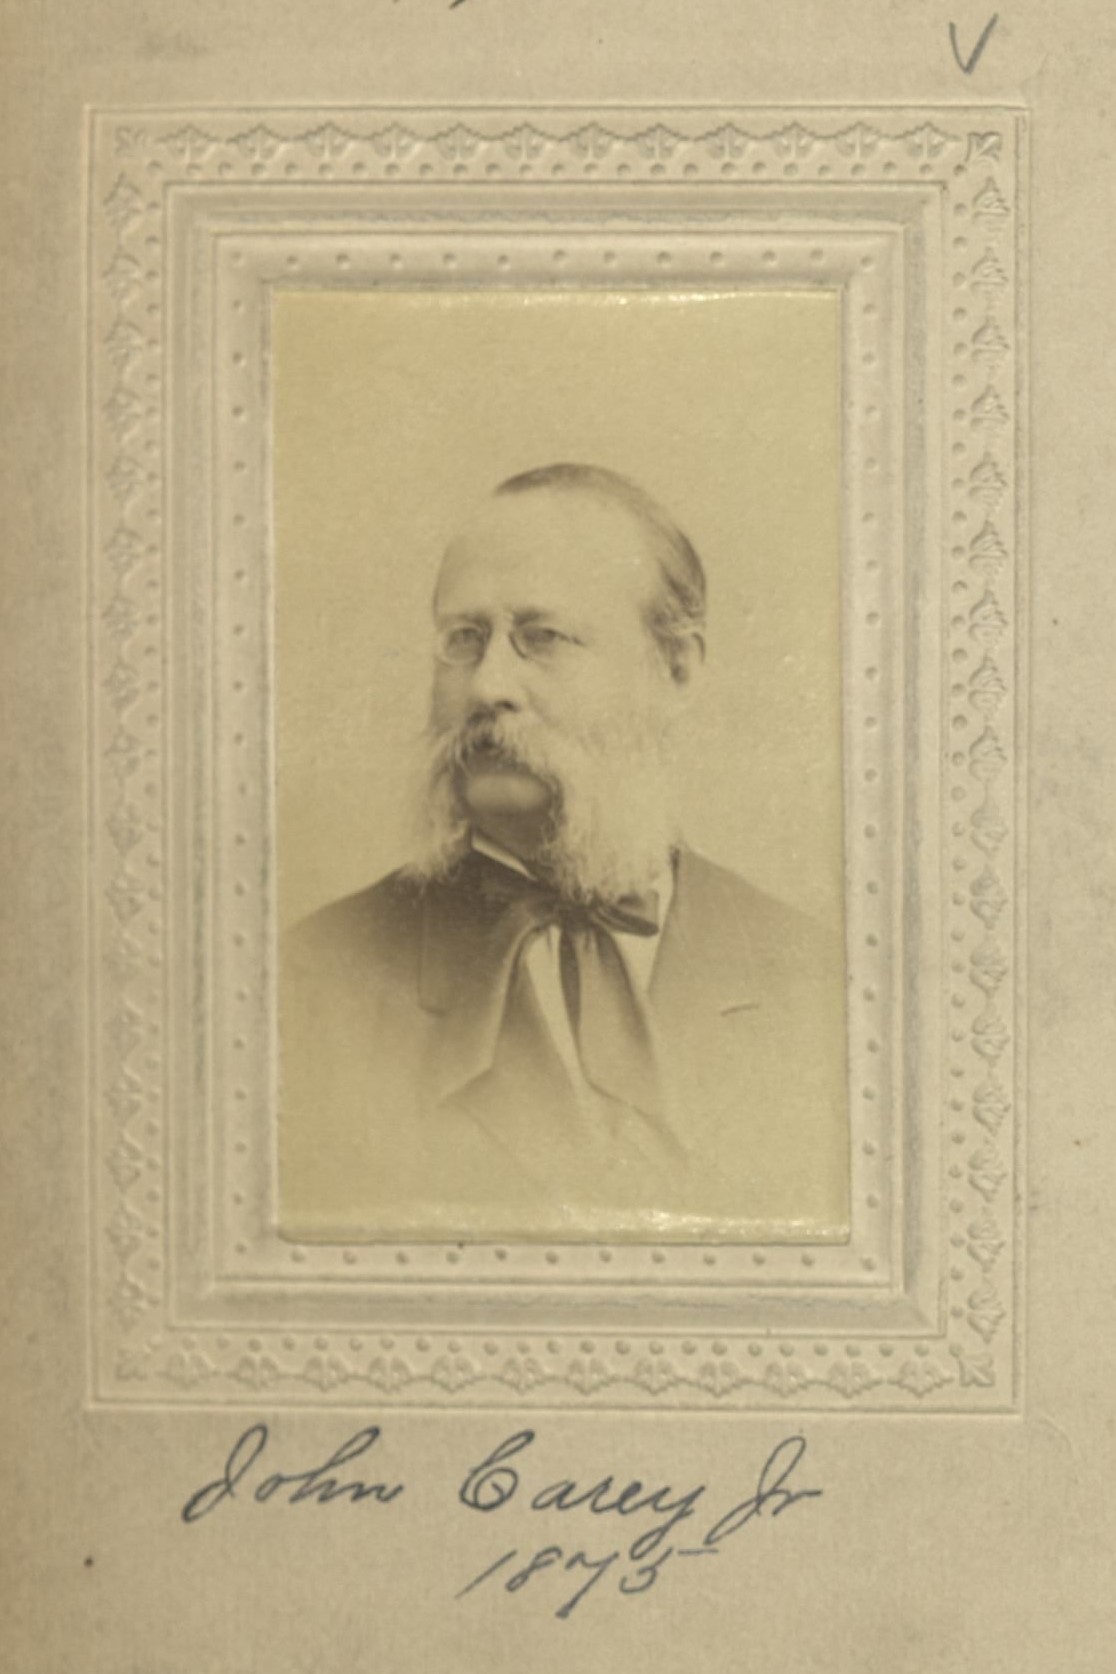 Member portrait of John Carey Jr.